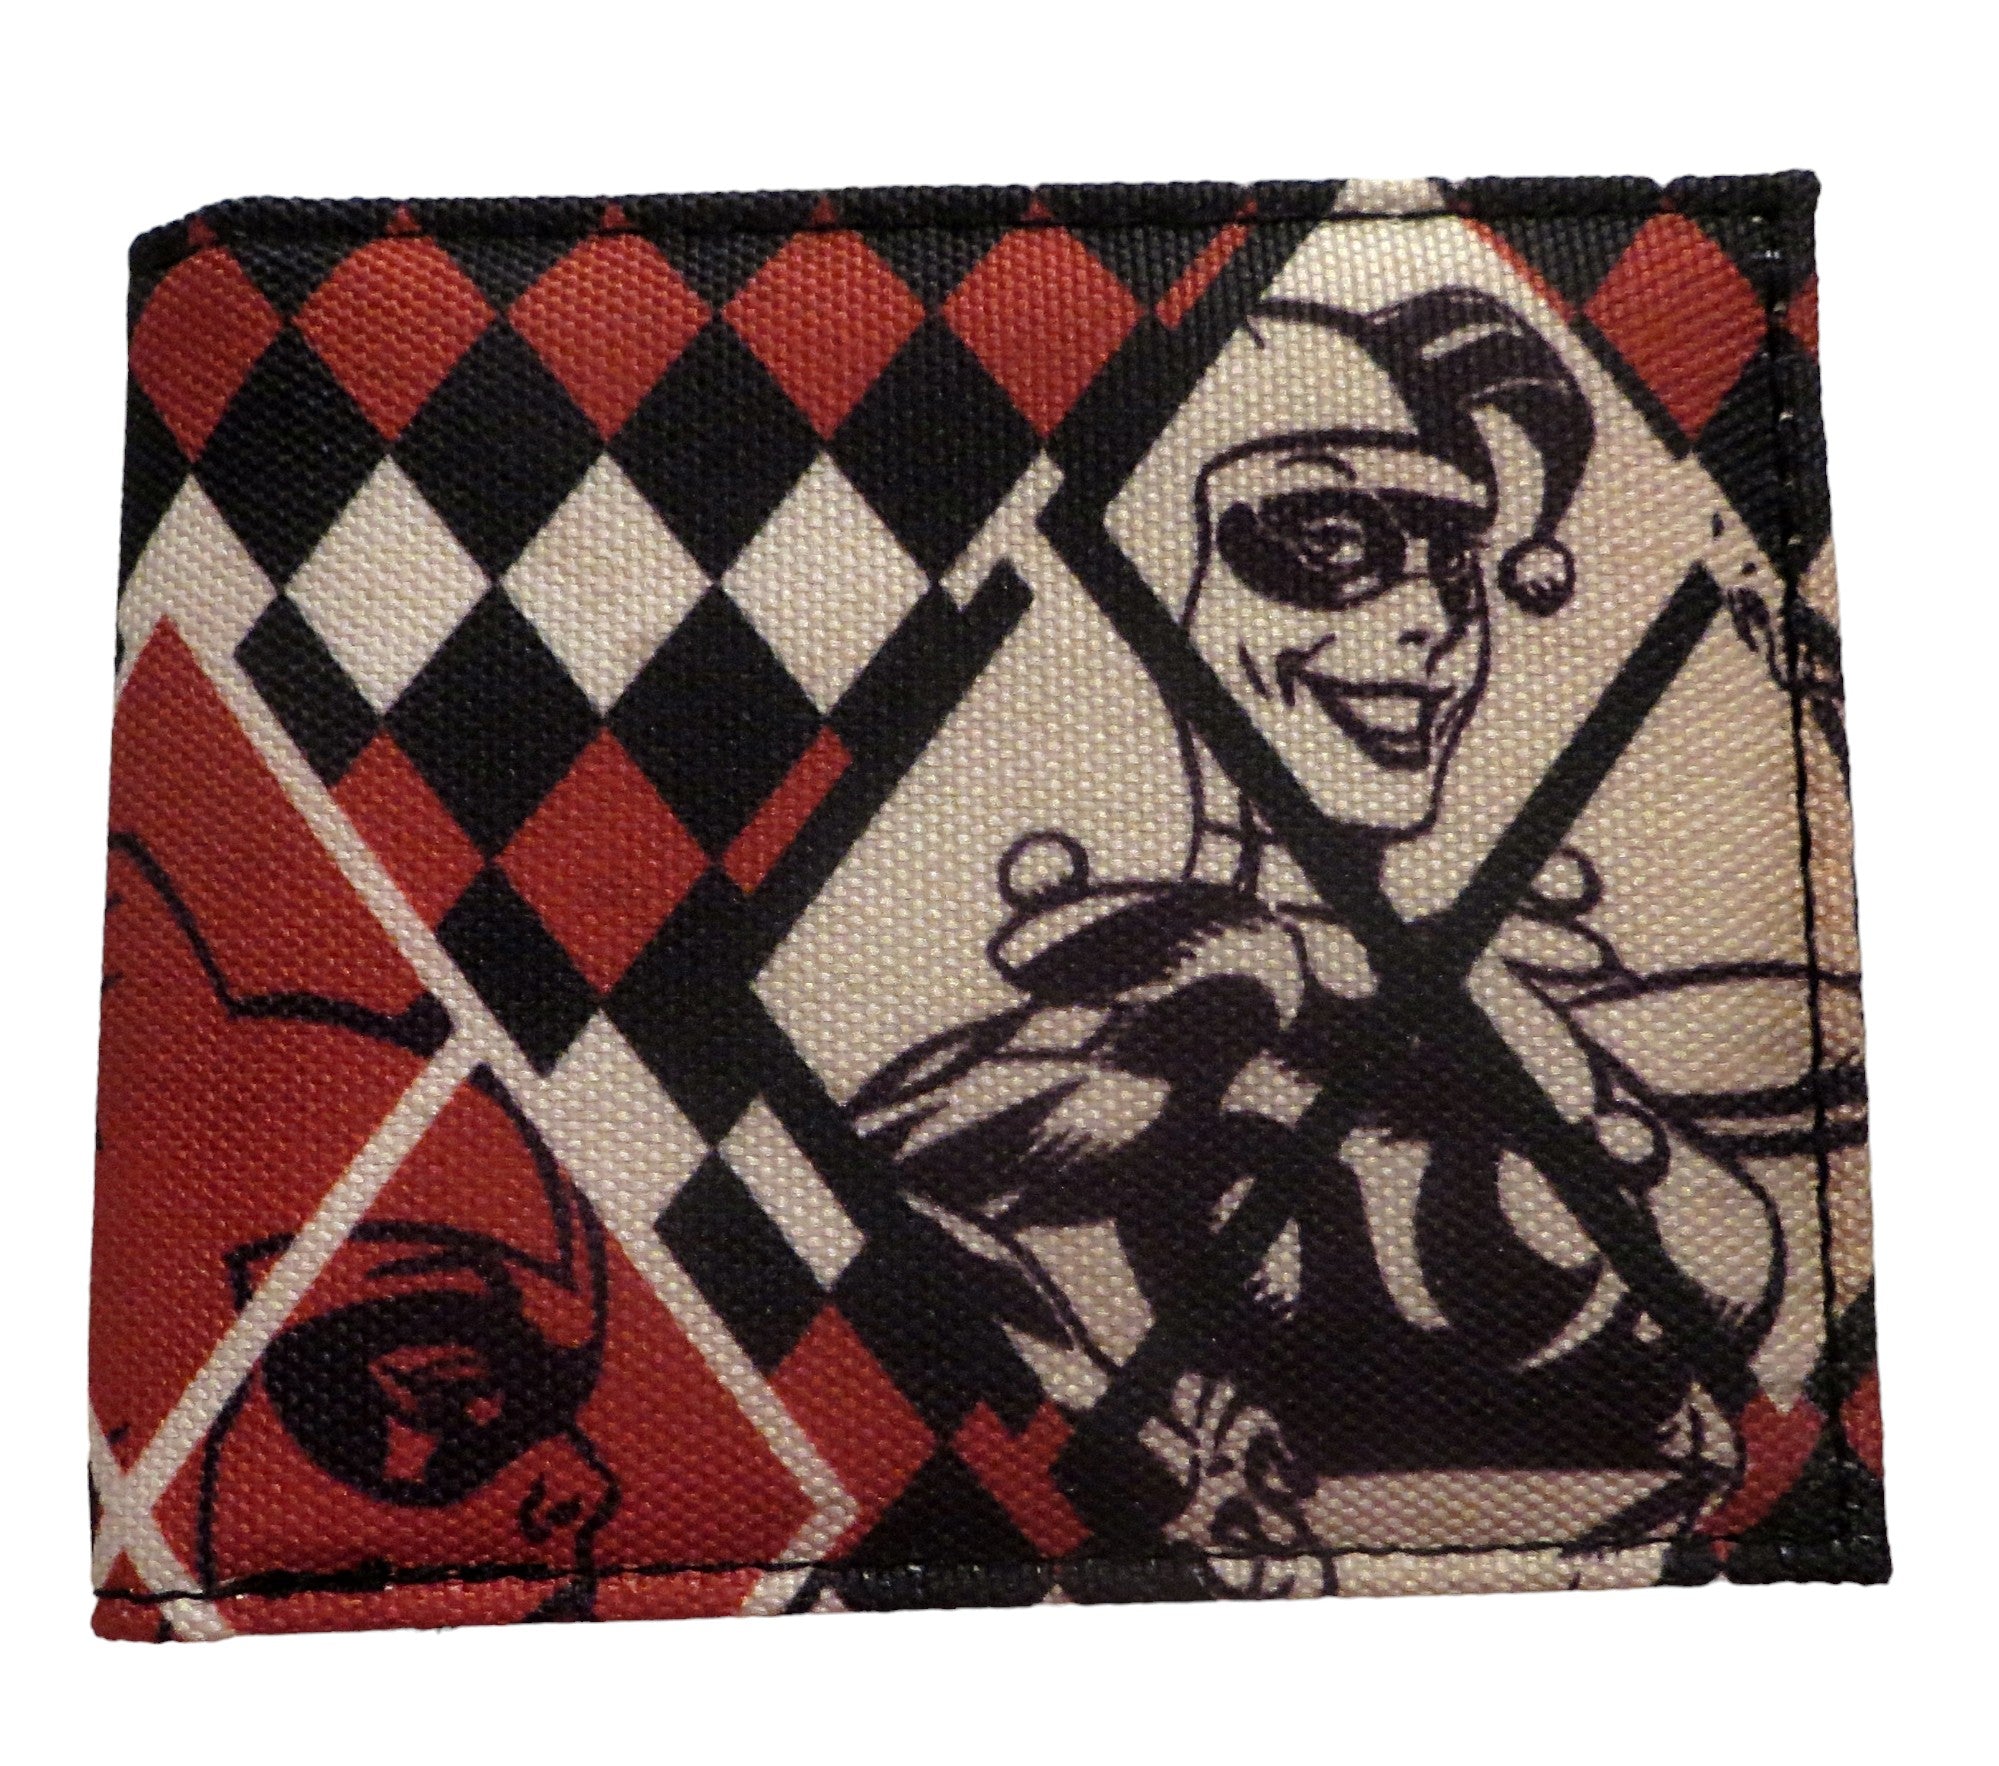 DC Comics harley quinn bifold wallet at nerd imports